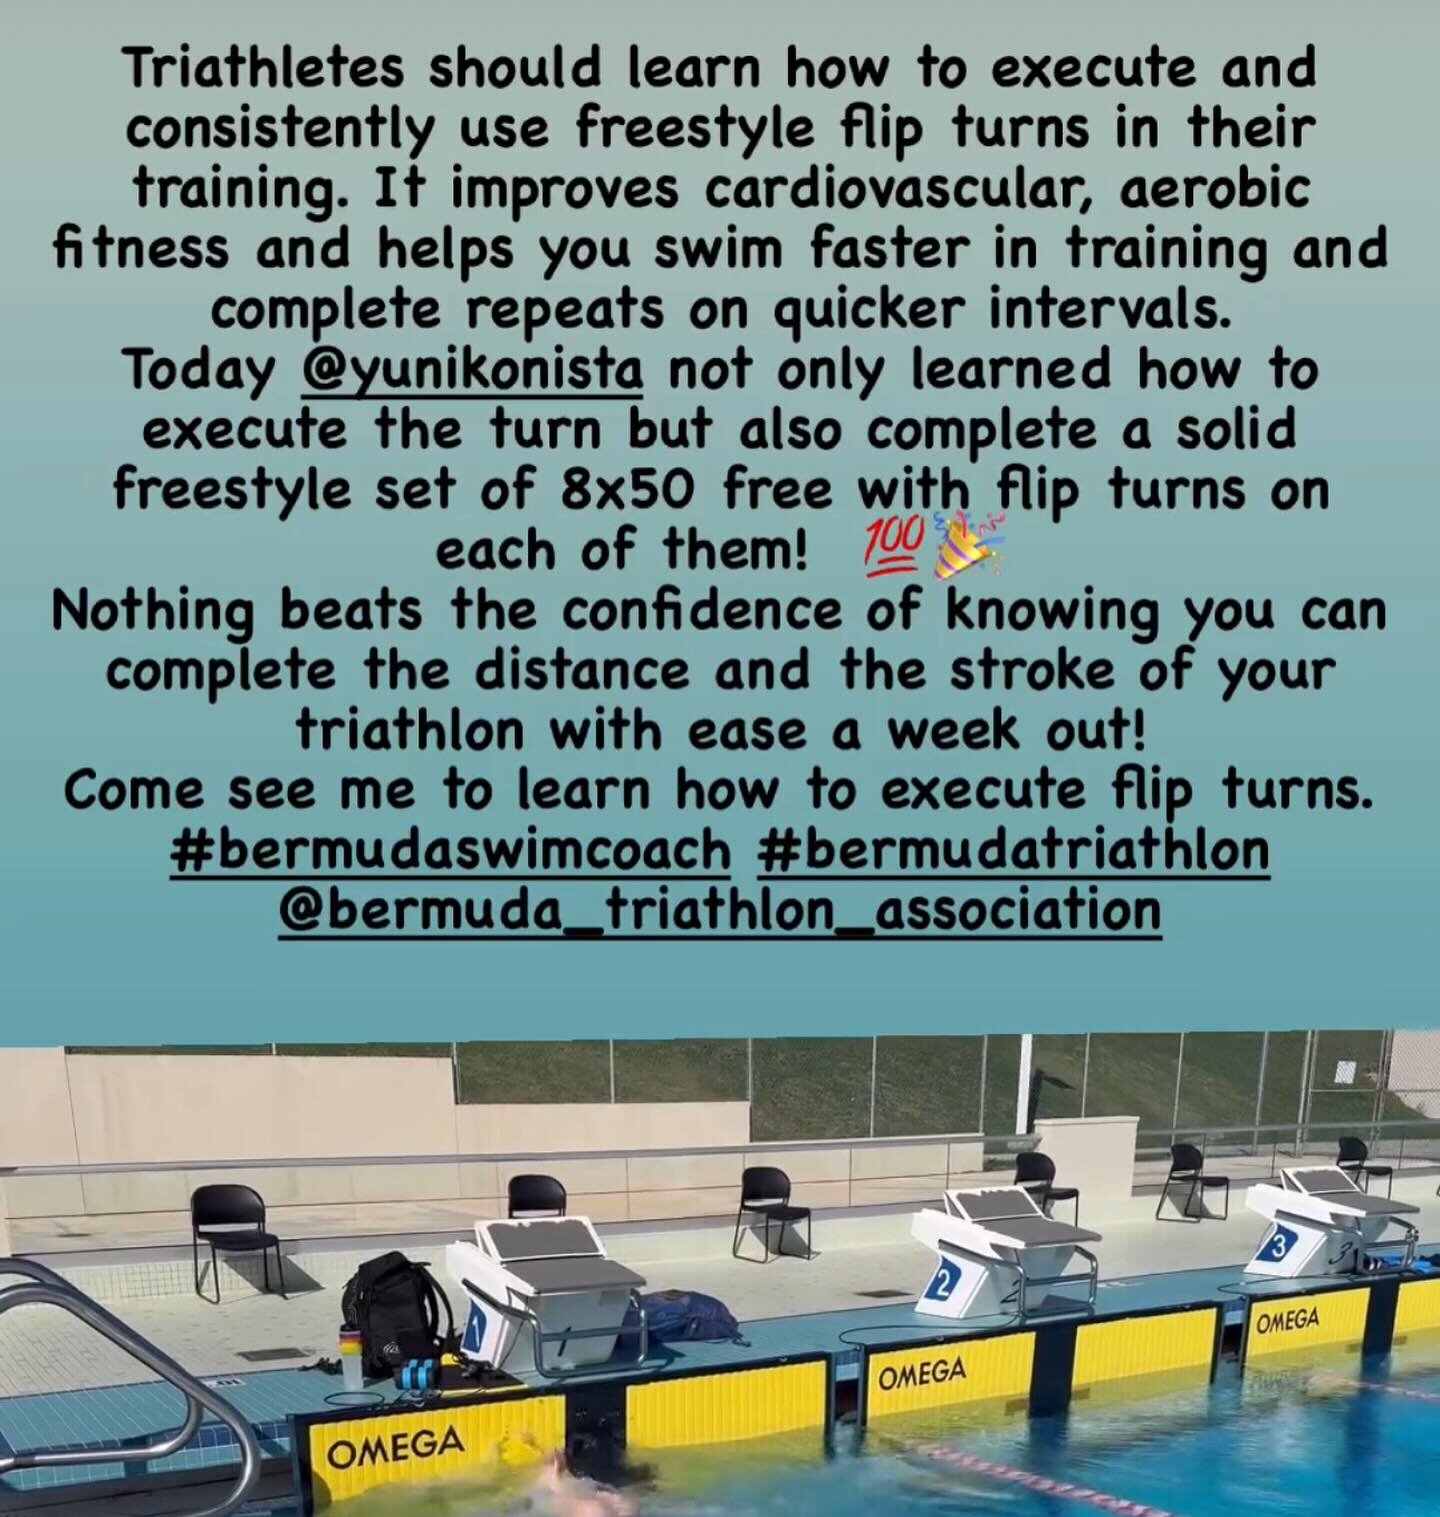 Flip turns for triathletes ⭐️
#bermudaswimcoach #bermudaswimming #bermudatriathlon